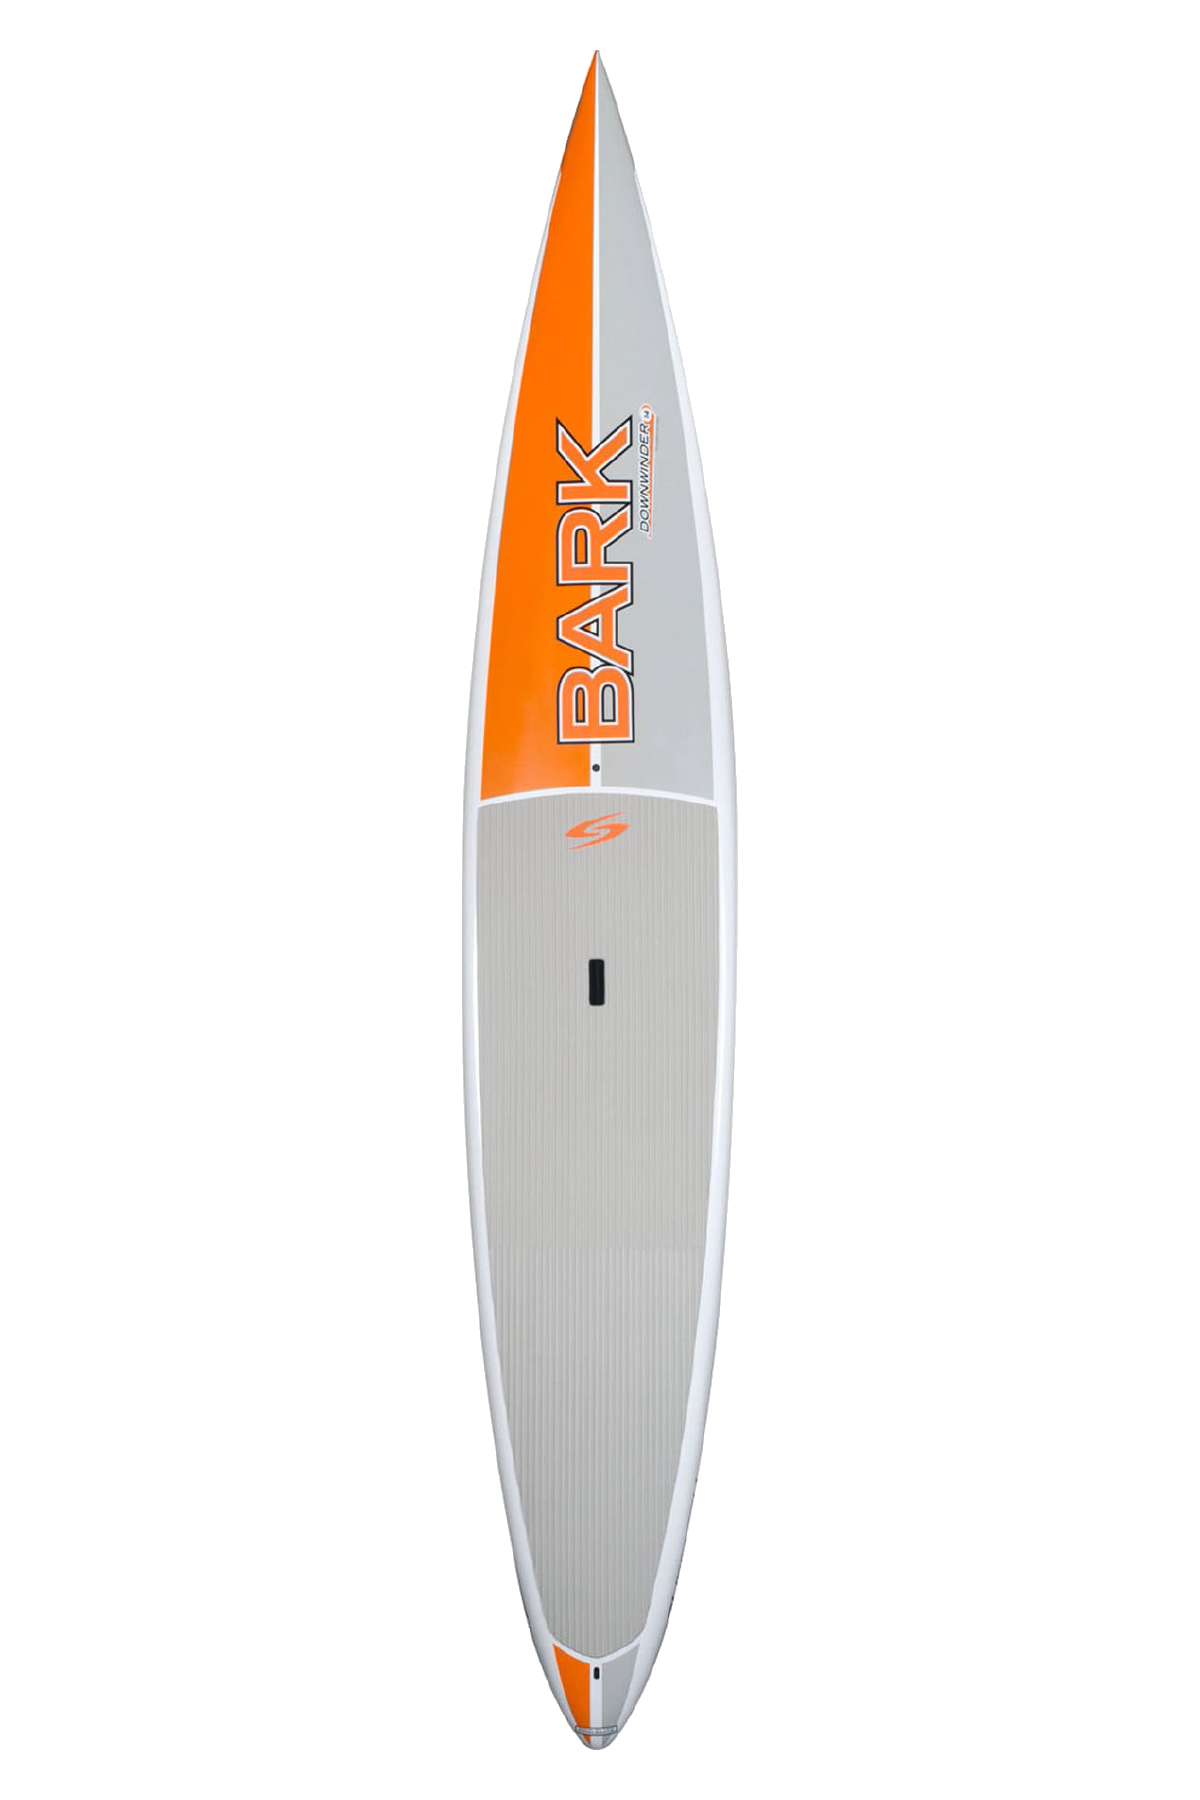 14'0 SURFTECH SUP DOWNWINDER RACE - BARK ELITE - 28"